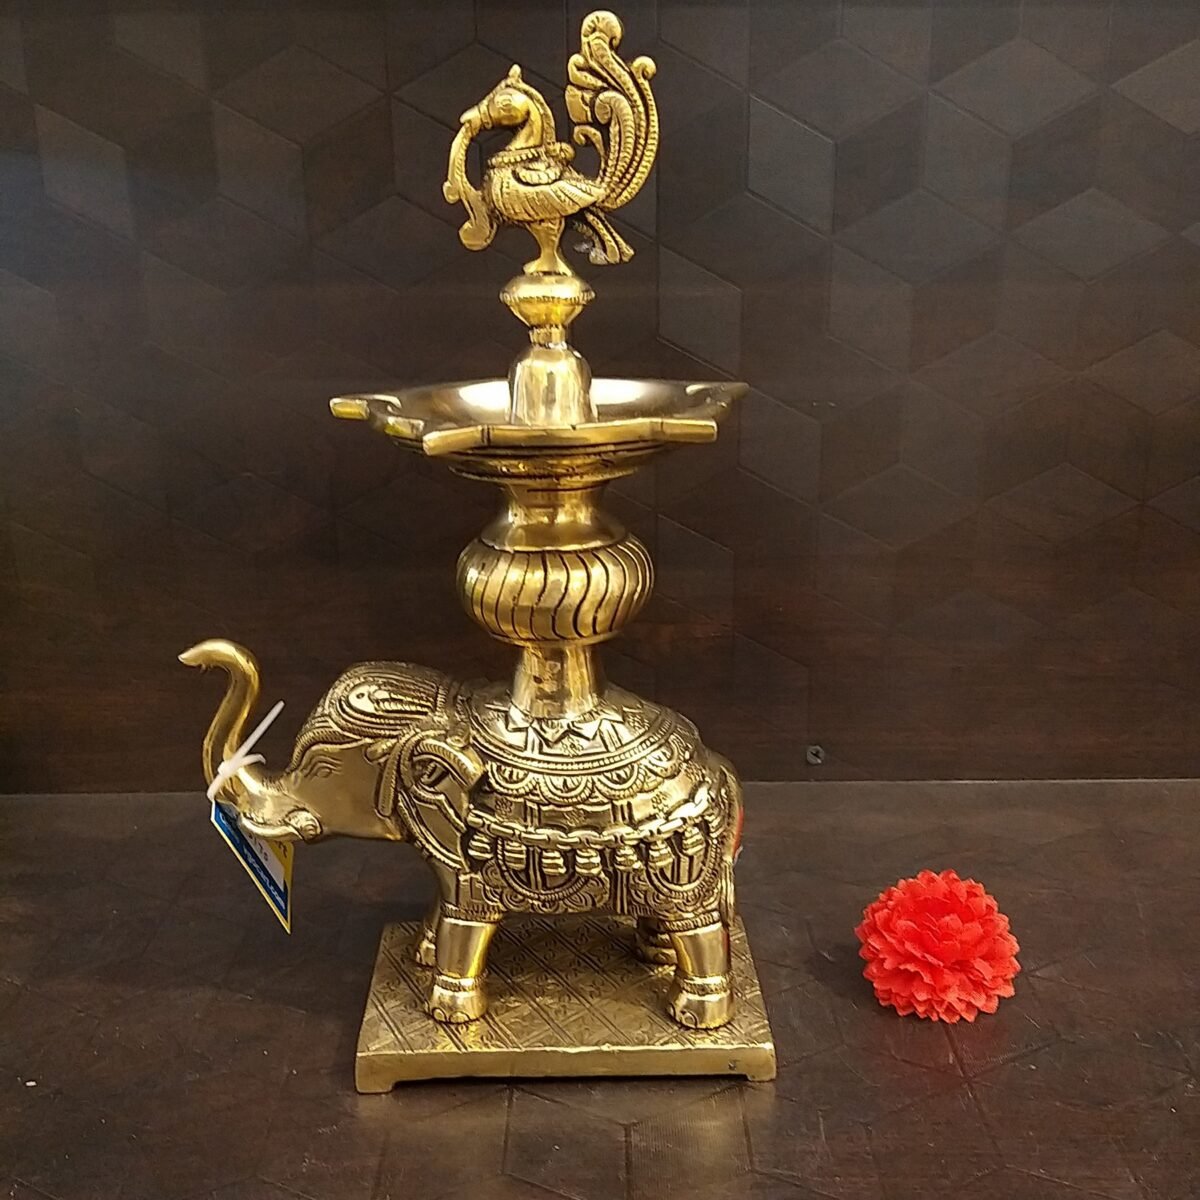 brass kuthuvilakku on elephant idol big statue home decor pooja items hindu god idols gift buy online india 10211